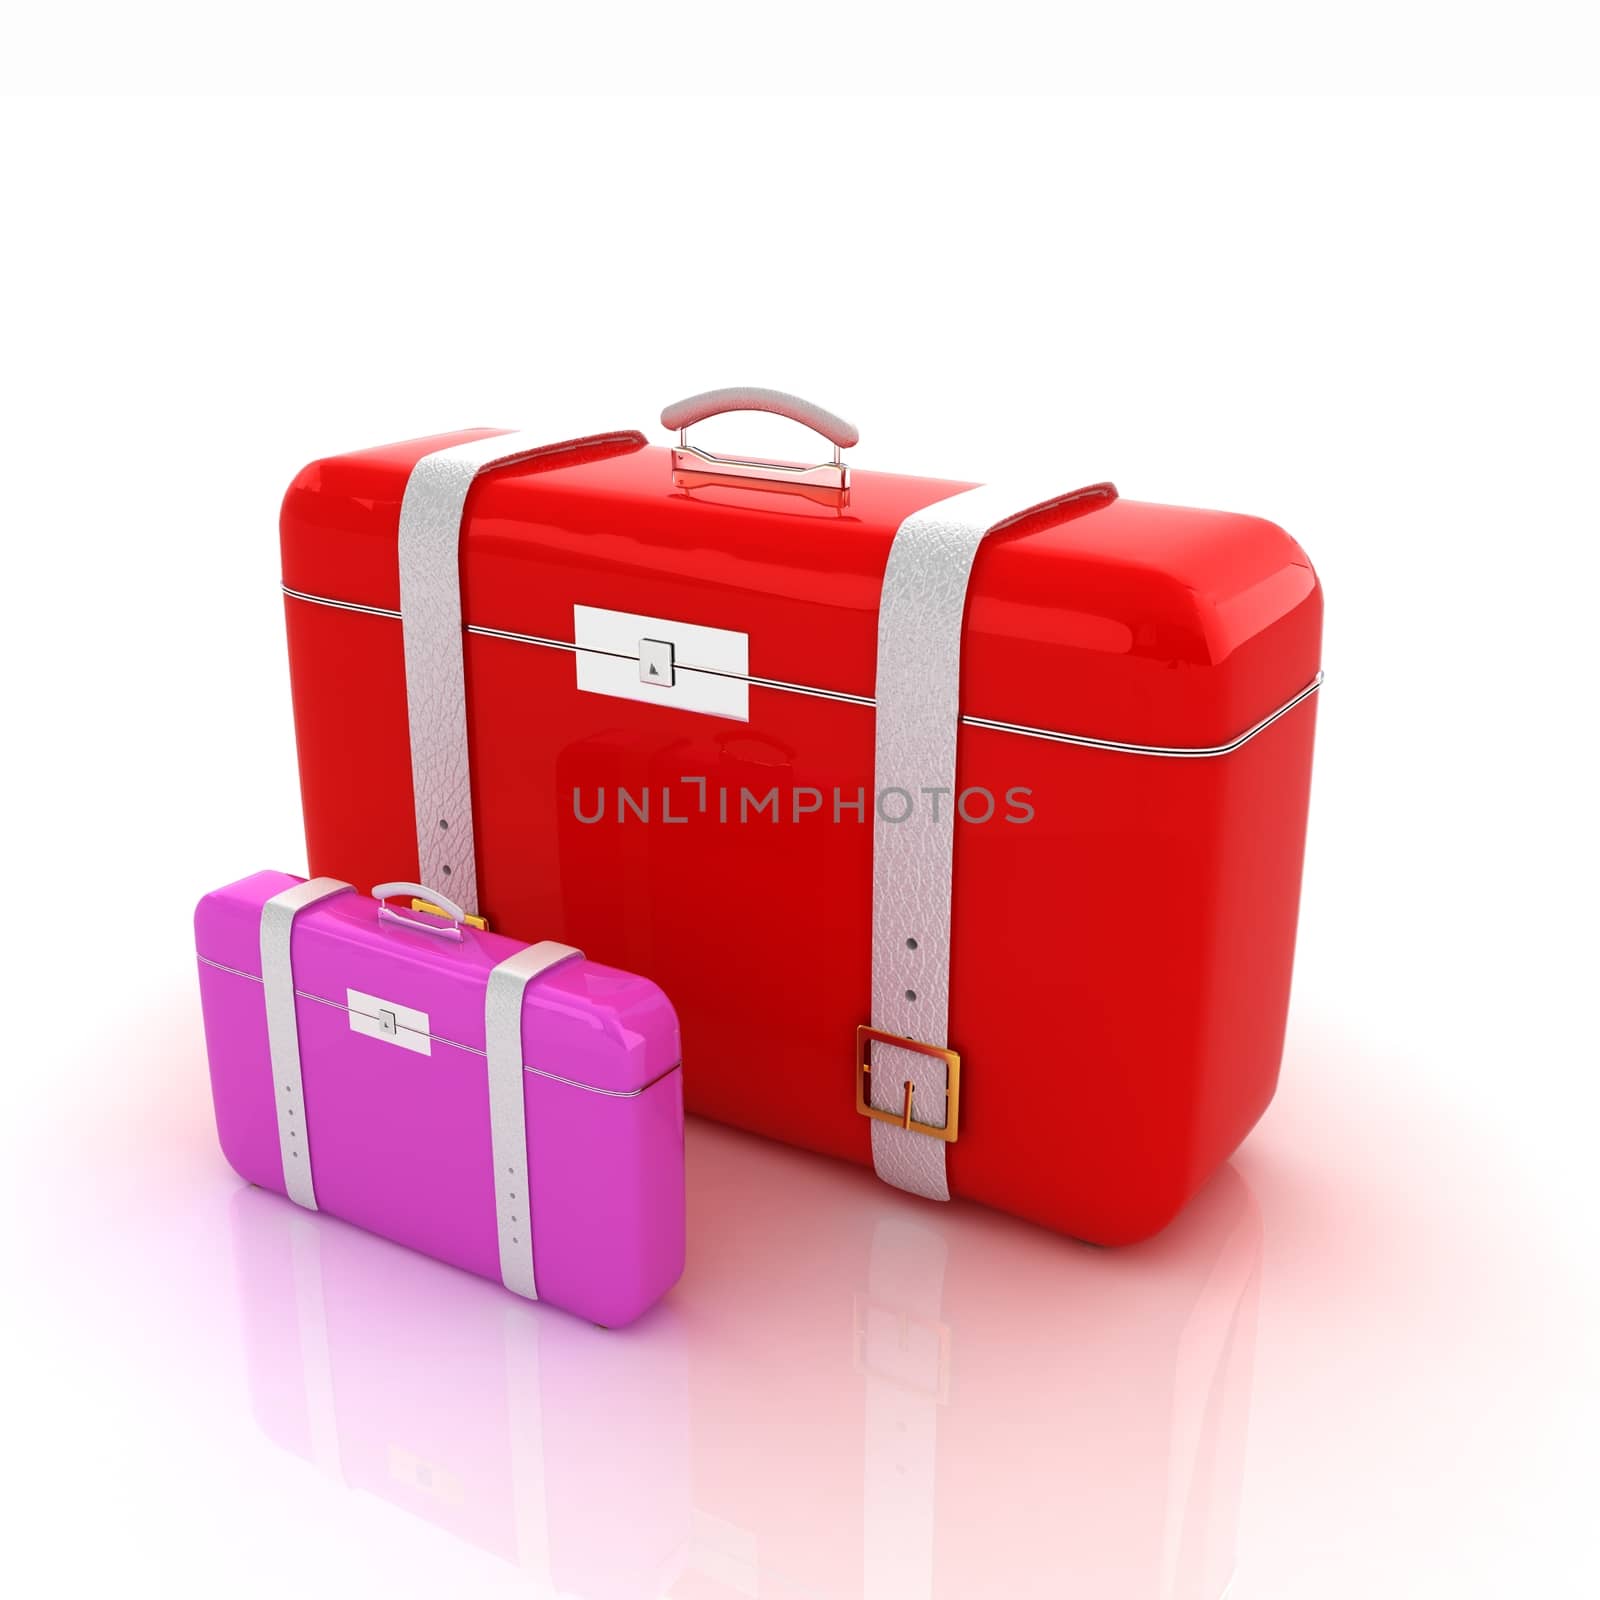 Traveler's suitcases. 